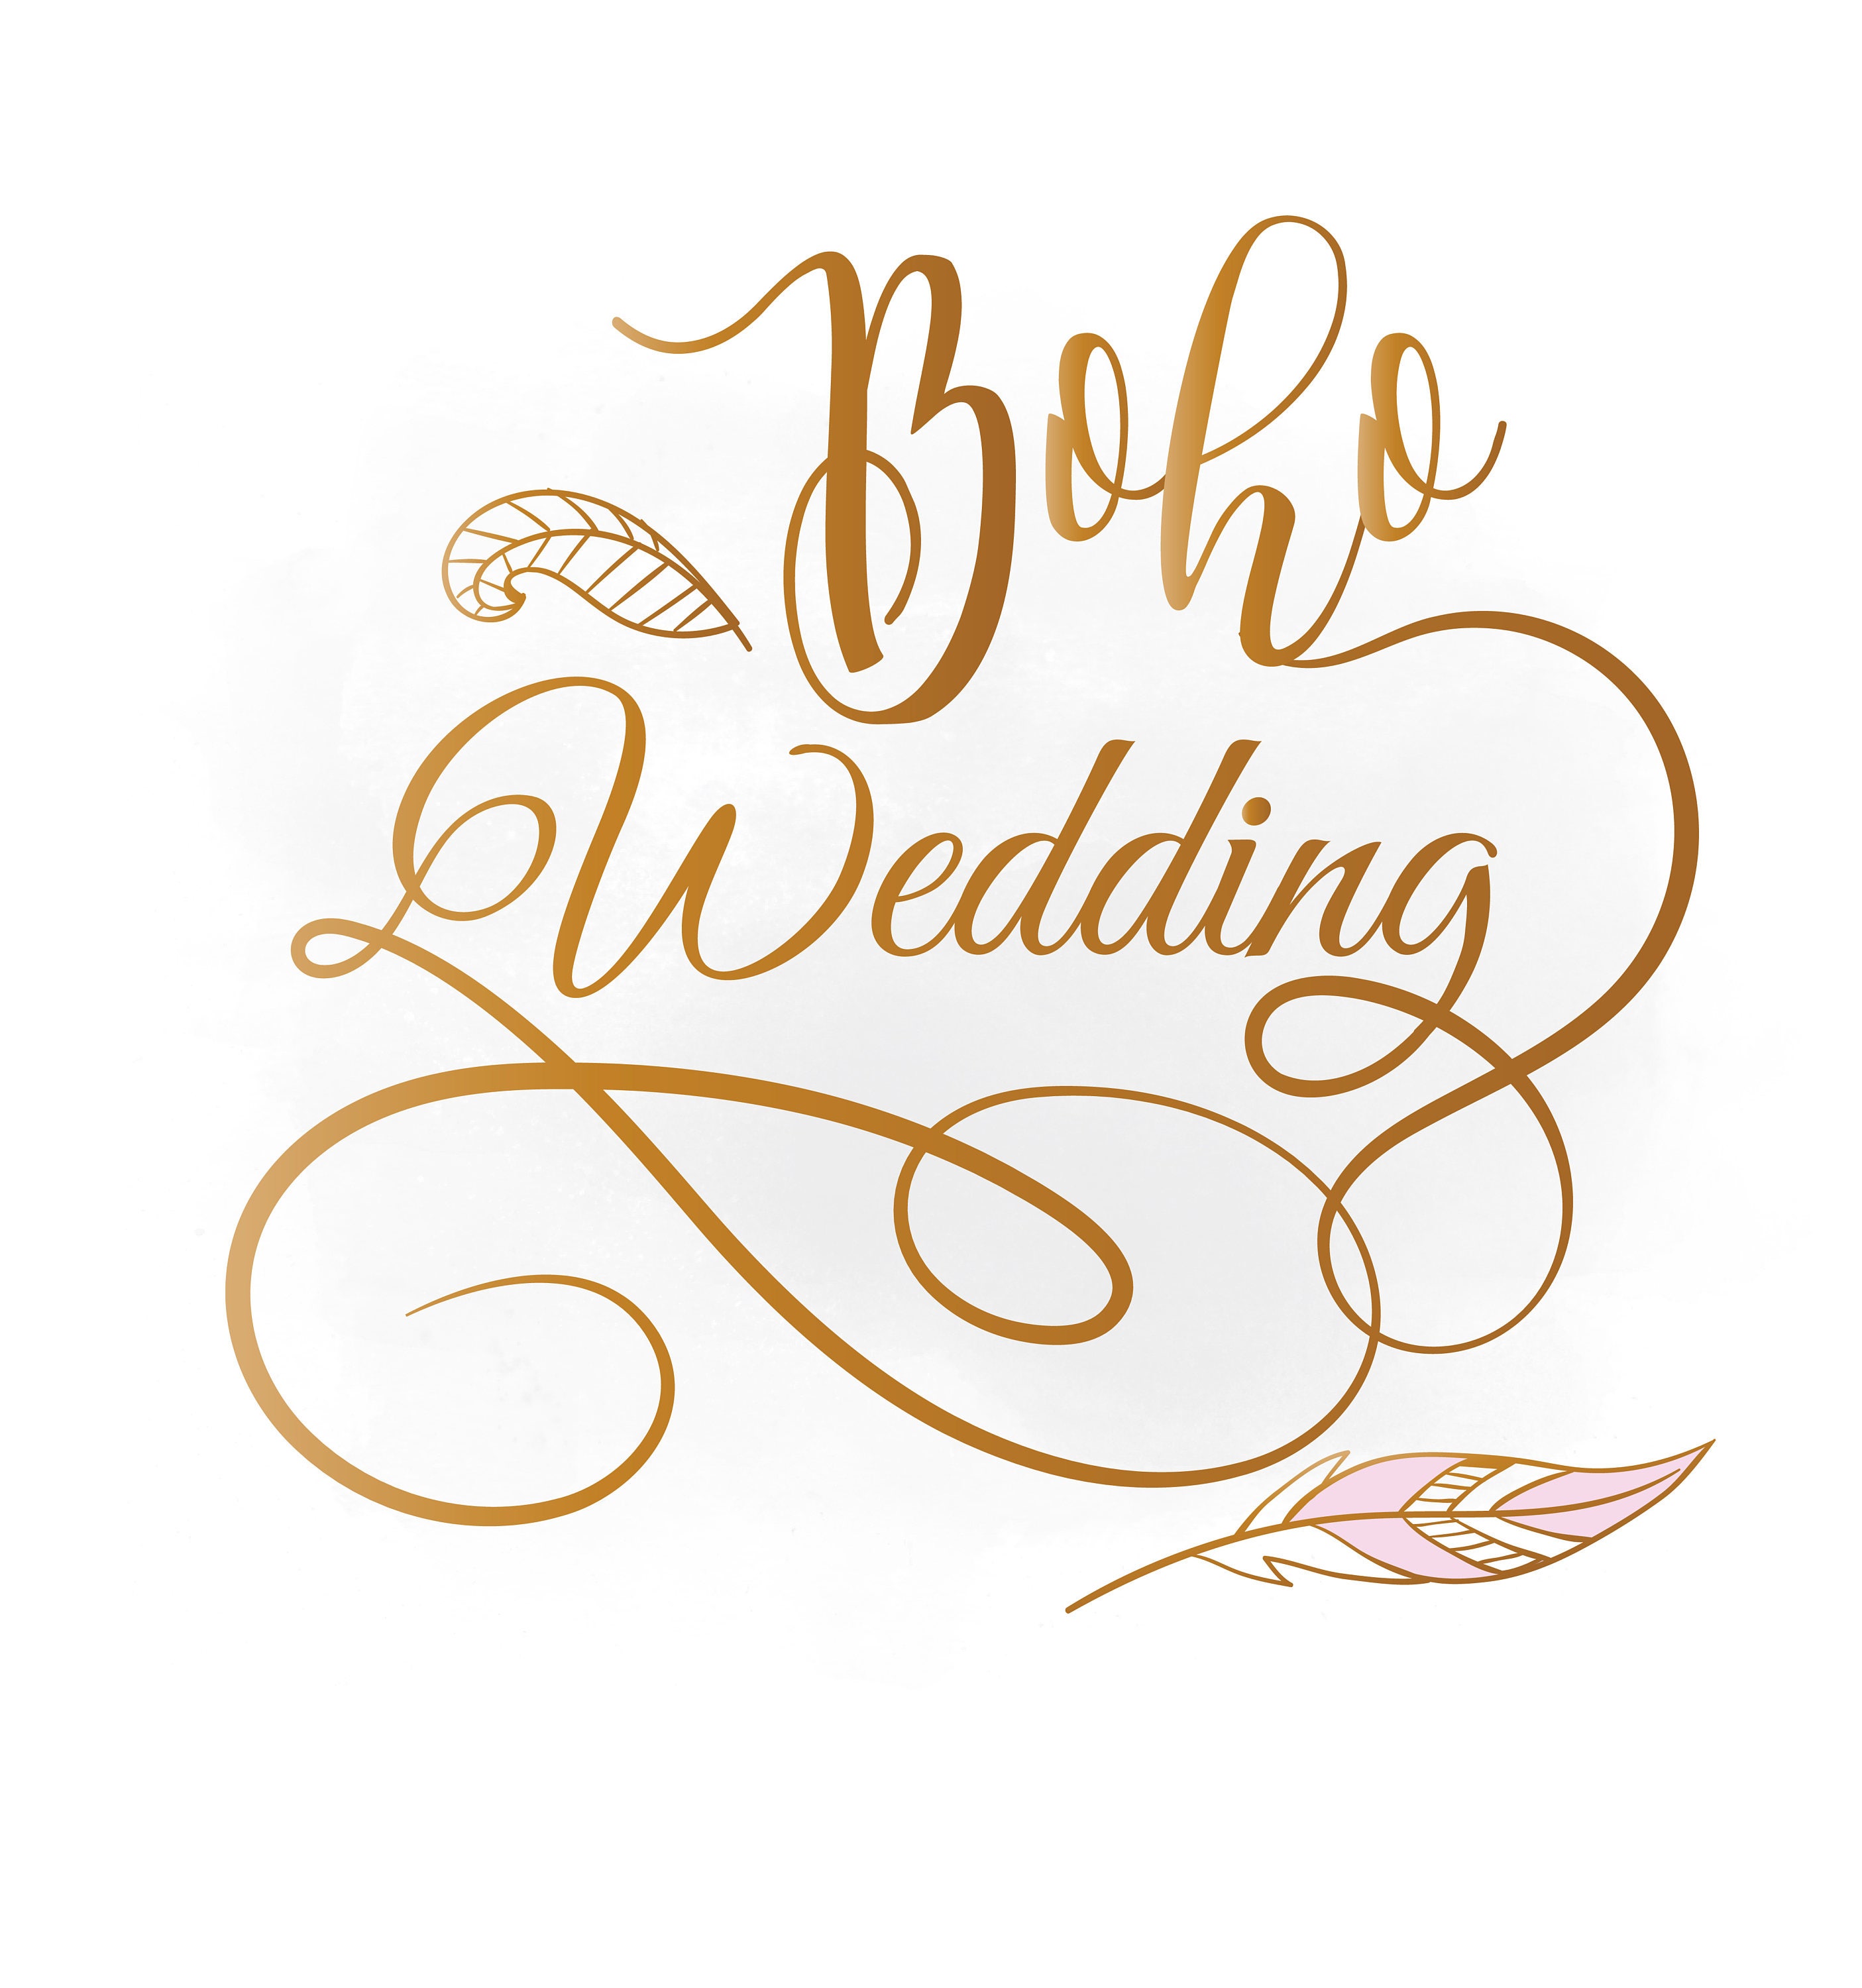 Download Boho Wedding SVG clipart wedding annuncment Boho wedding